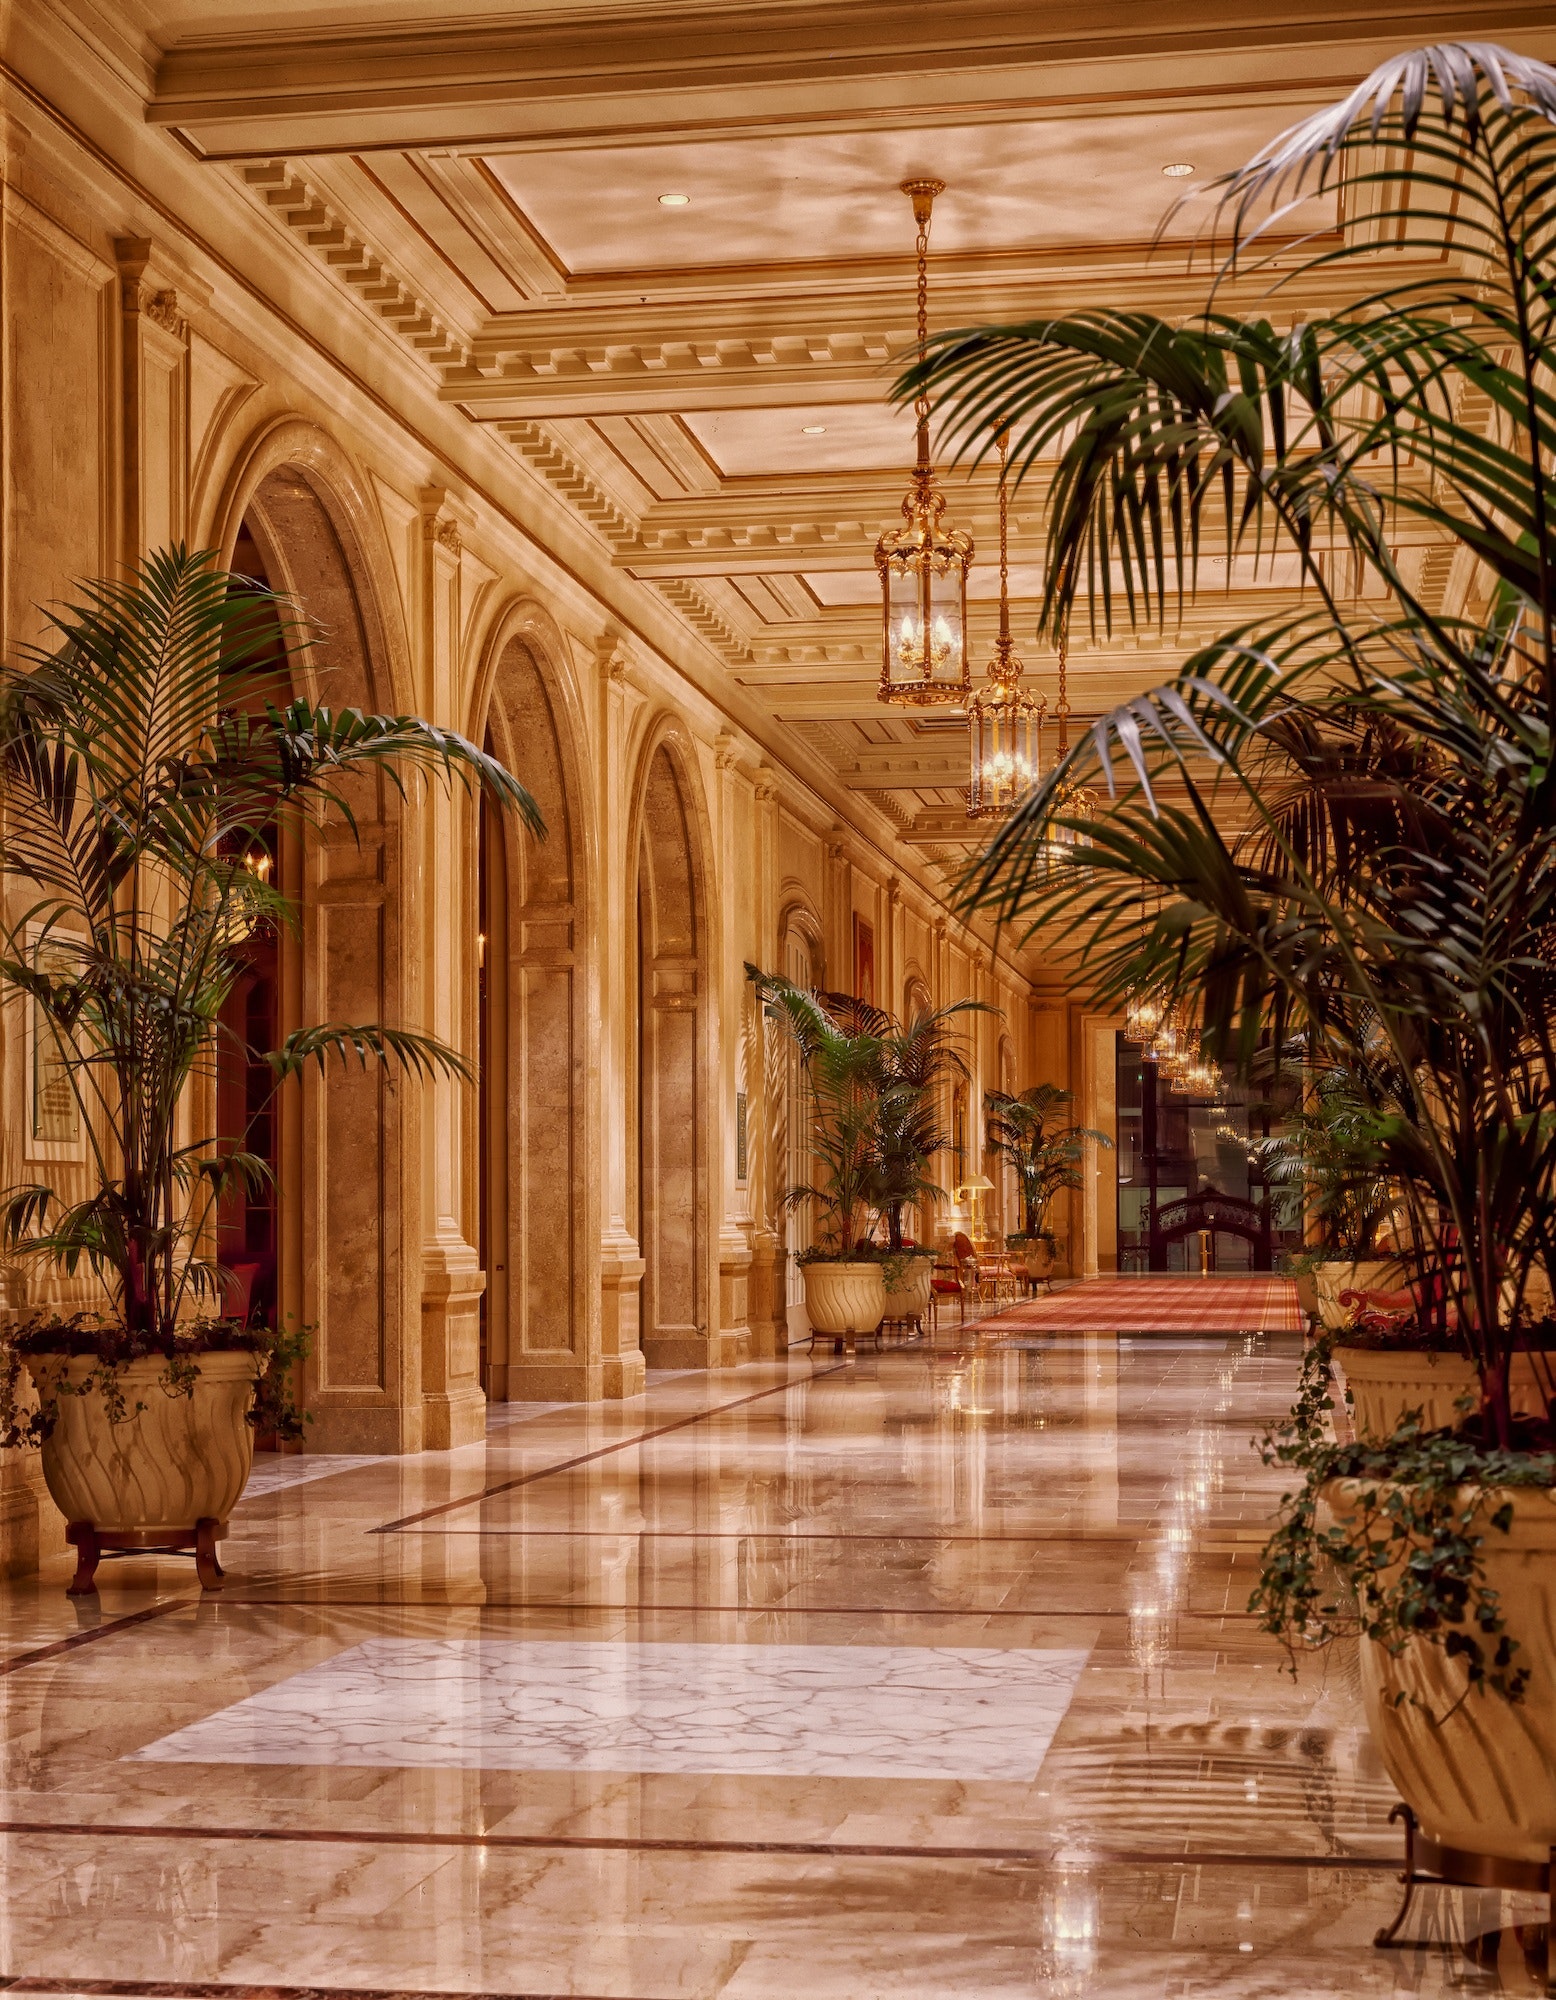 Best Hotel Lobby Photo · 100% Free Downloads